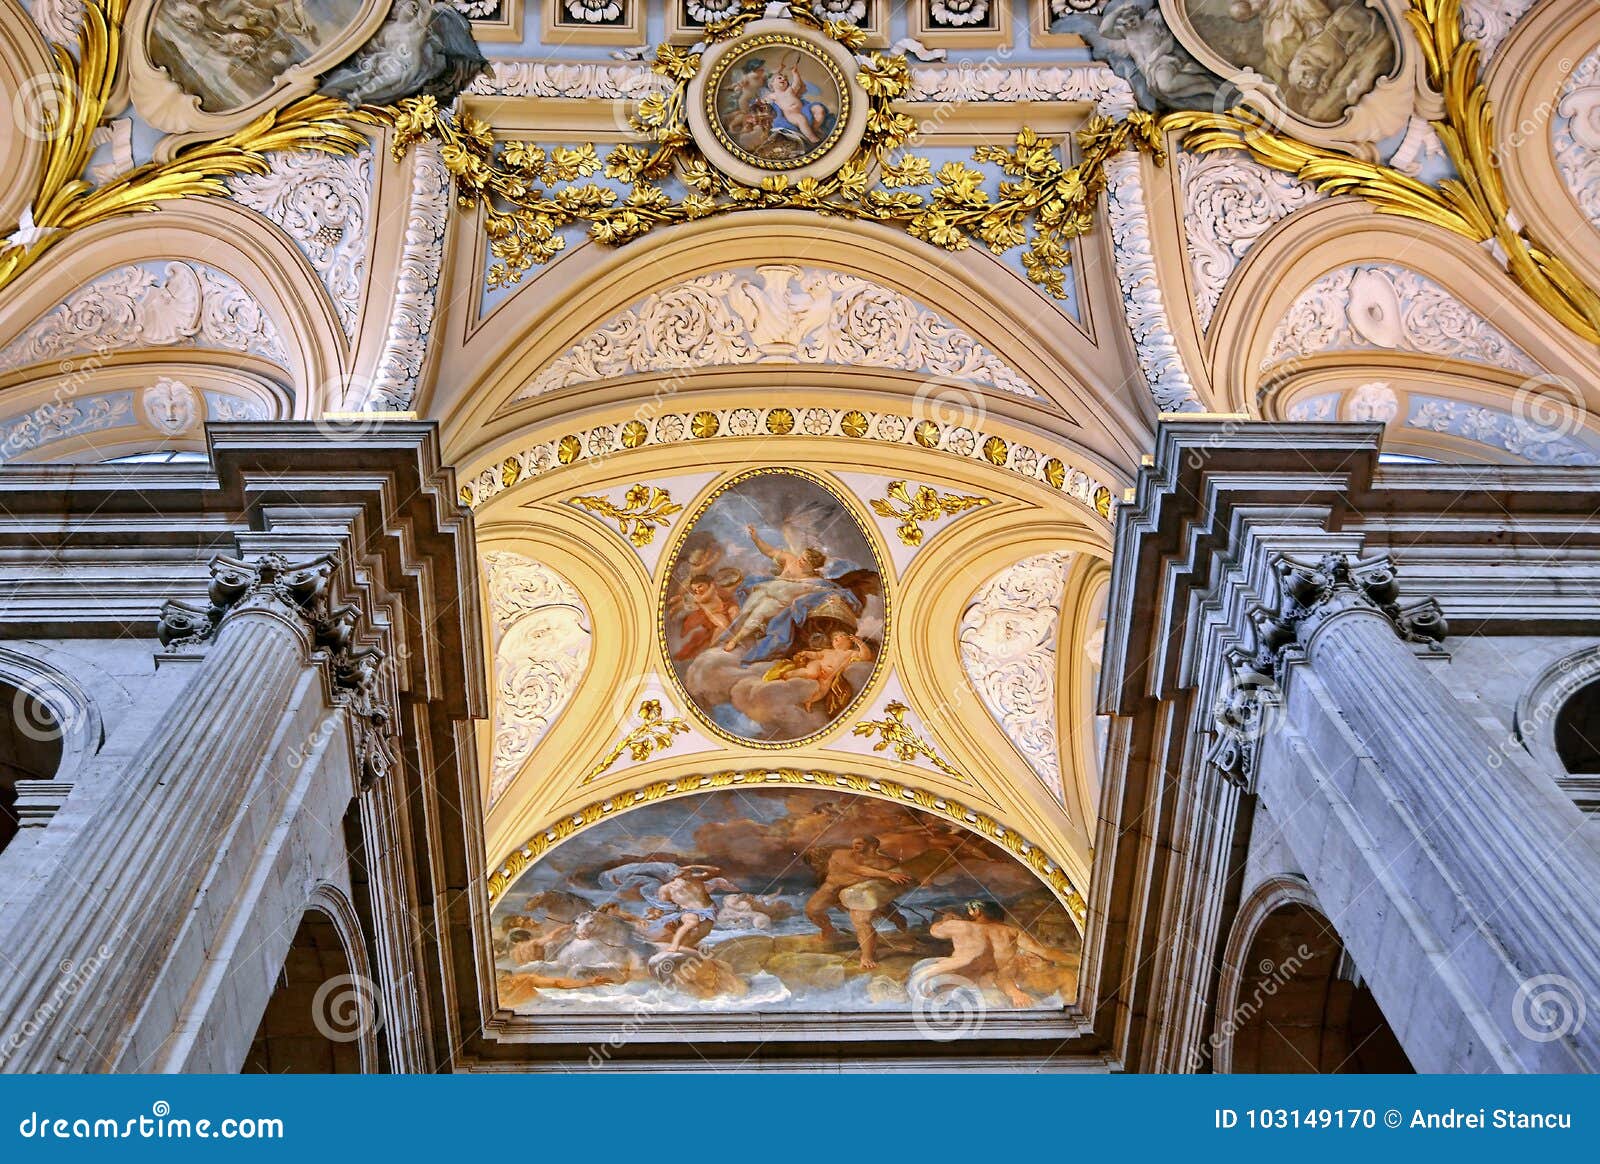 Interior Of Royal Palace Of Madrid Spain Stock Photo